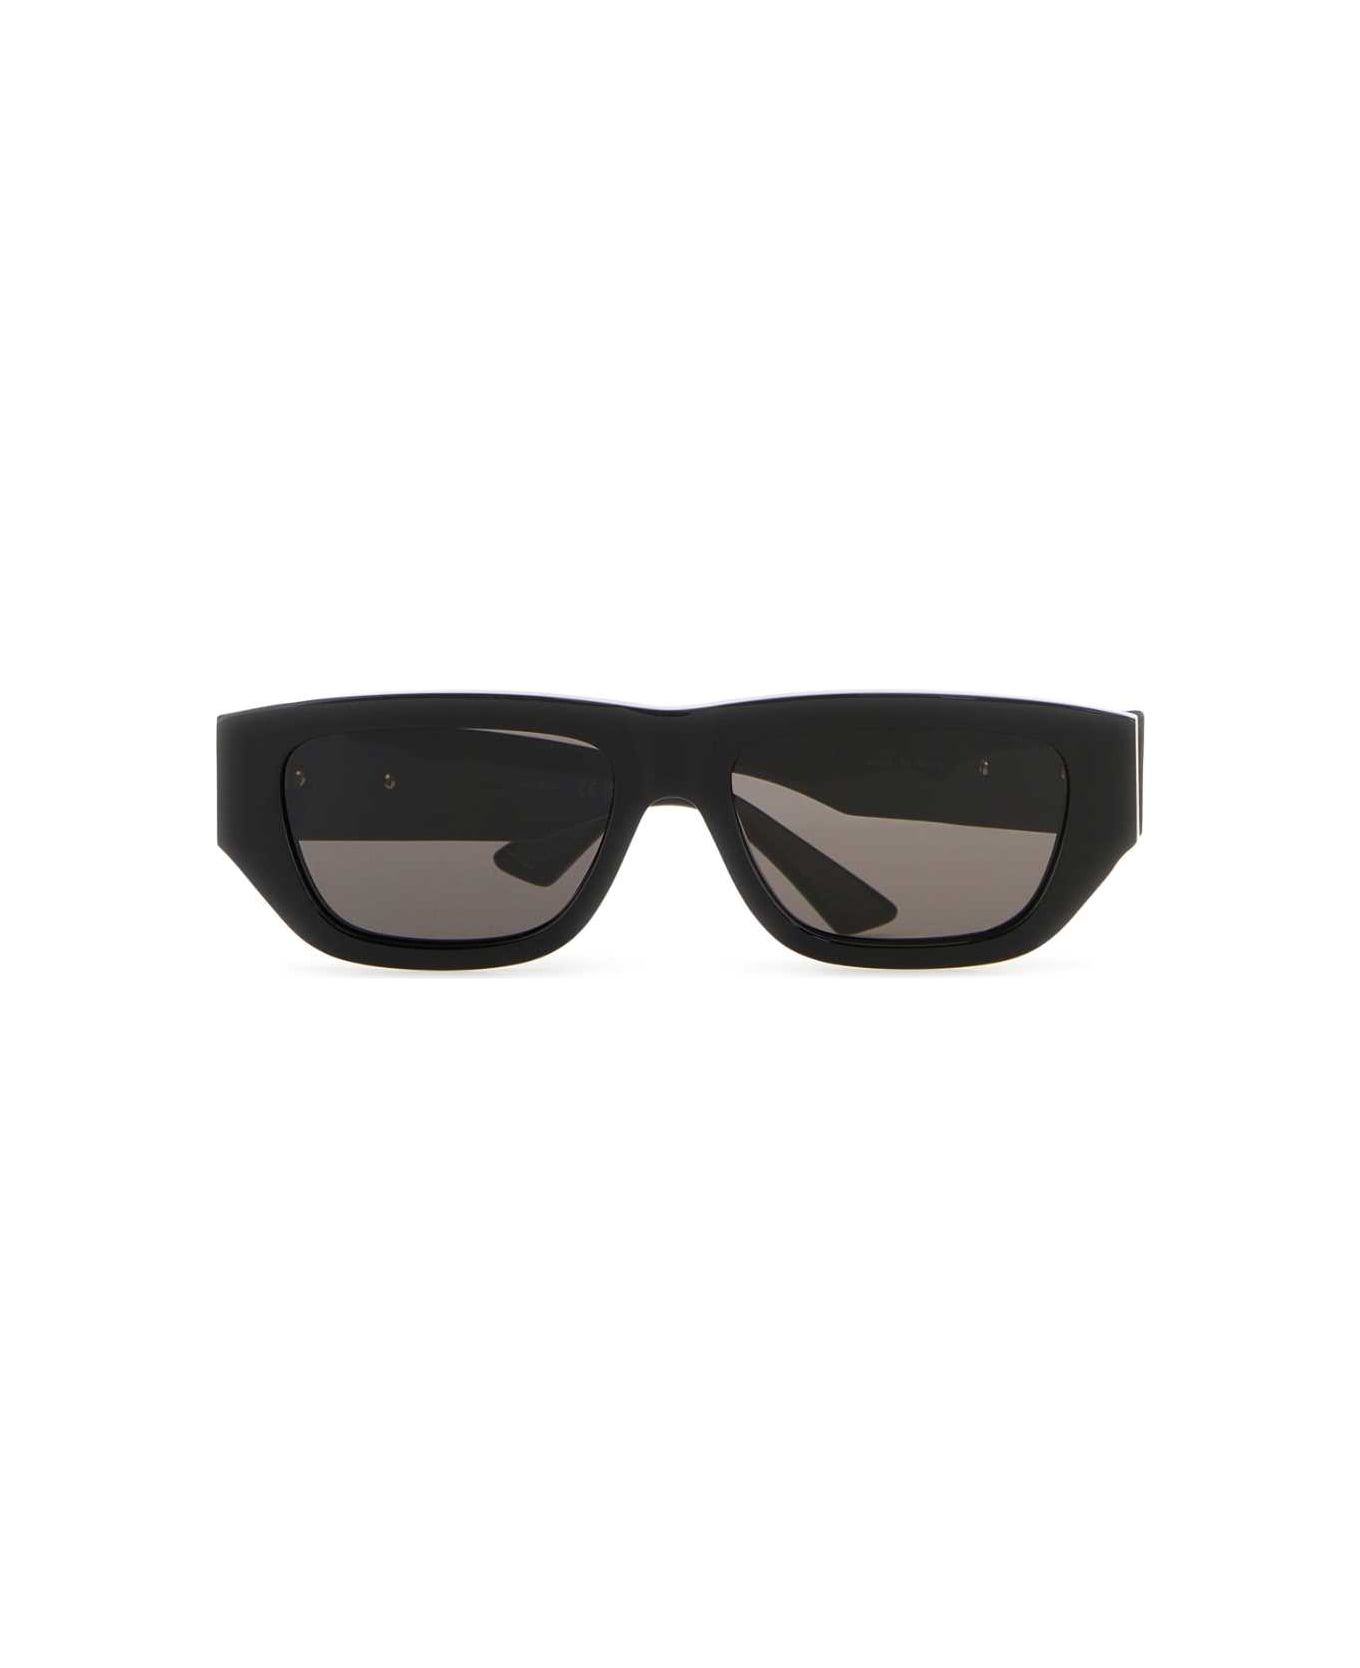 Bottega Veneta Black Acetate Sunglasses - BLACKGREY